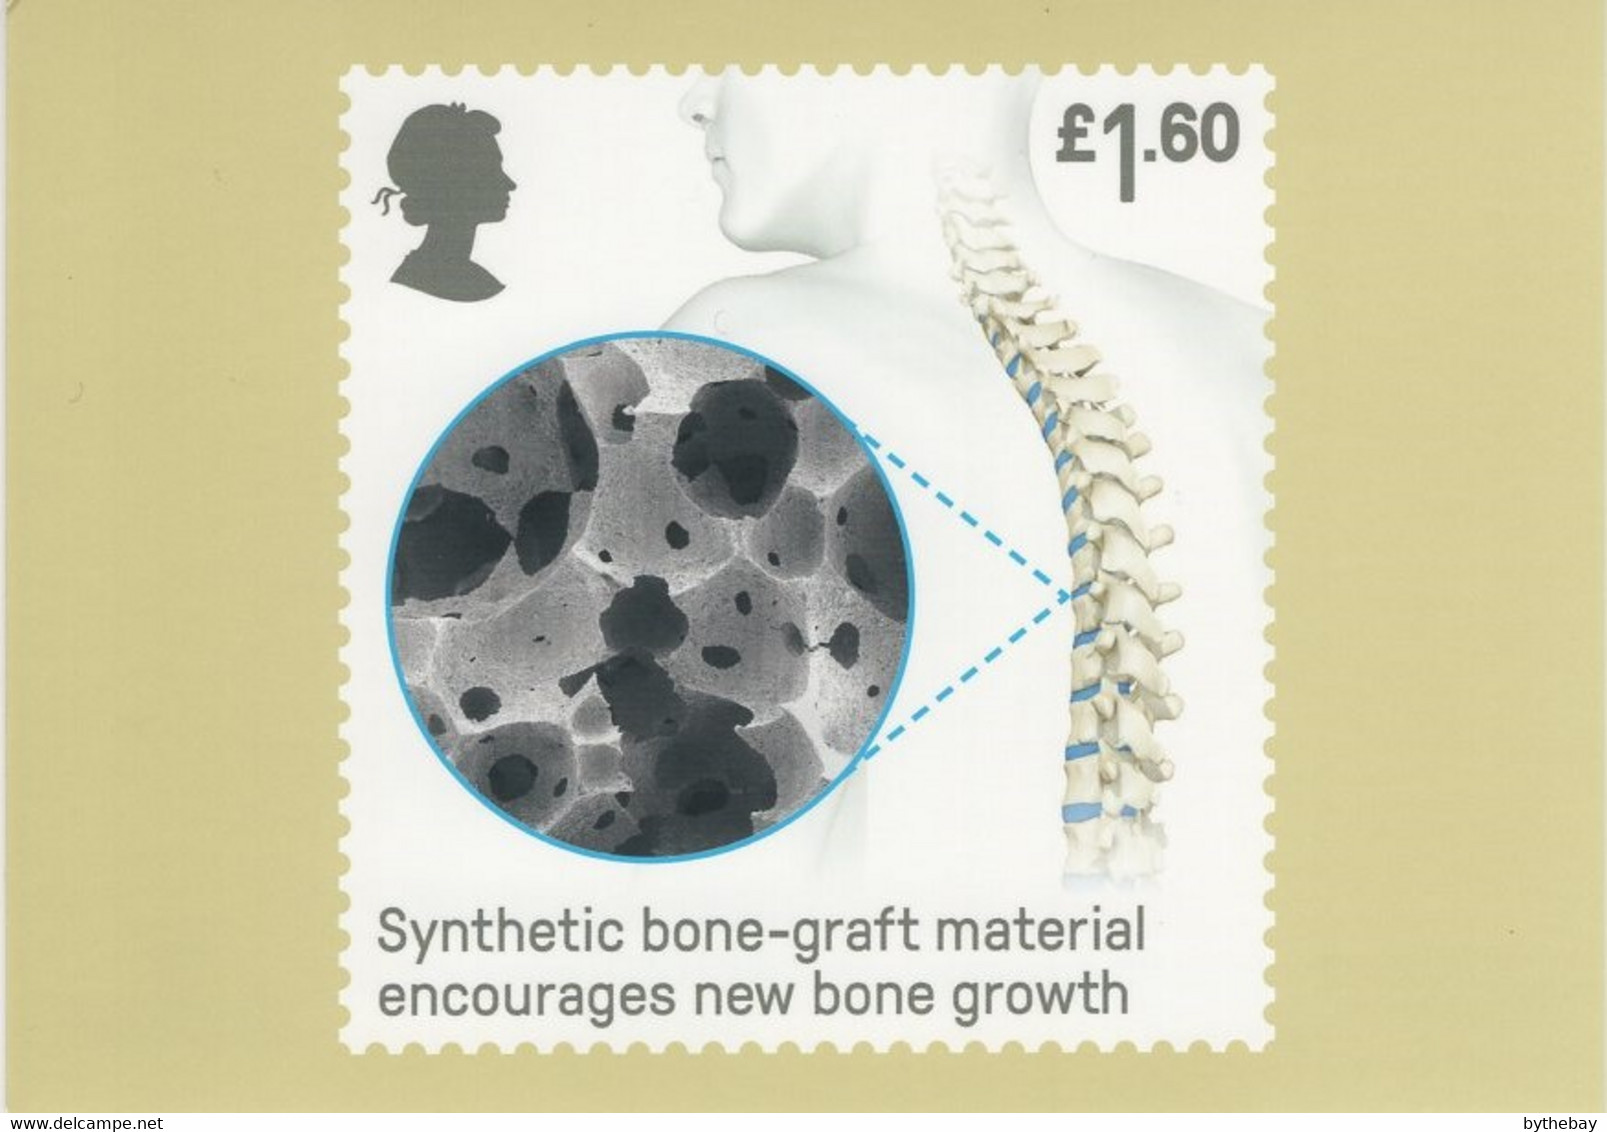 Great Britain 2019 PHQ Card Sc 3844 1.60pd Synthetic Bone-graft Material - PHQ Karten